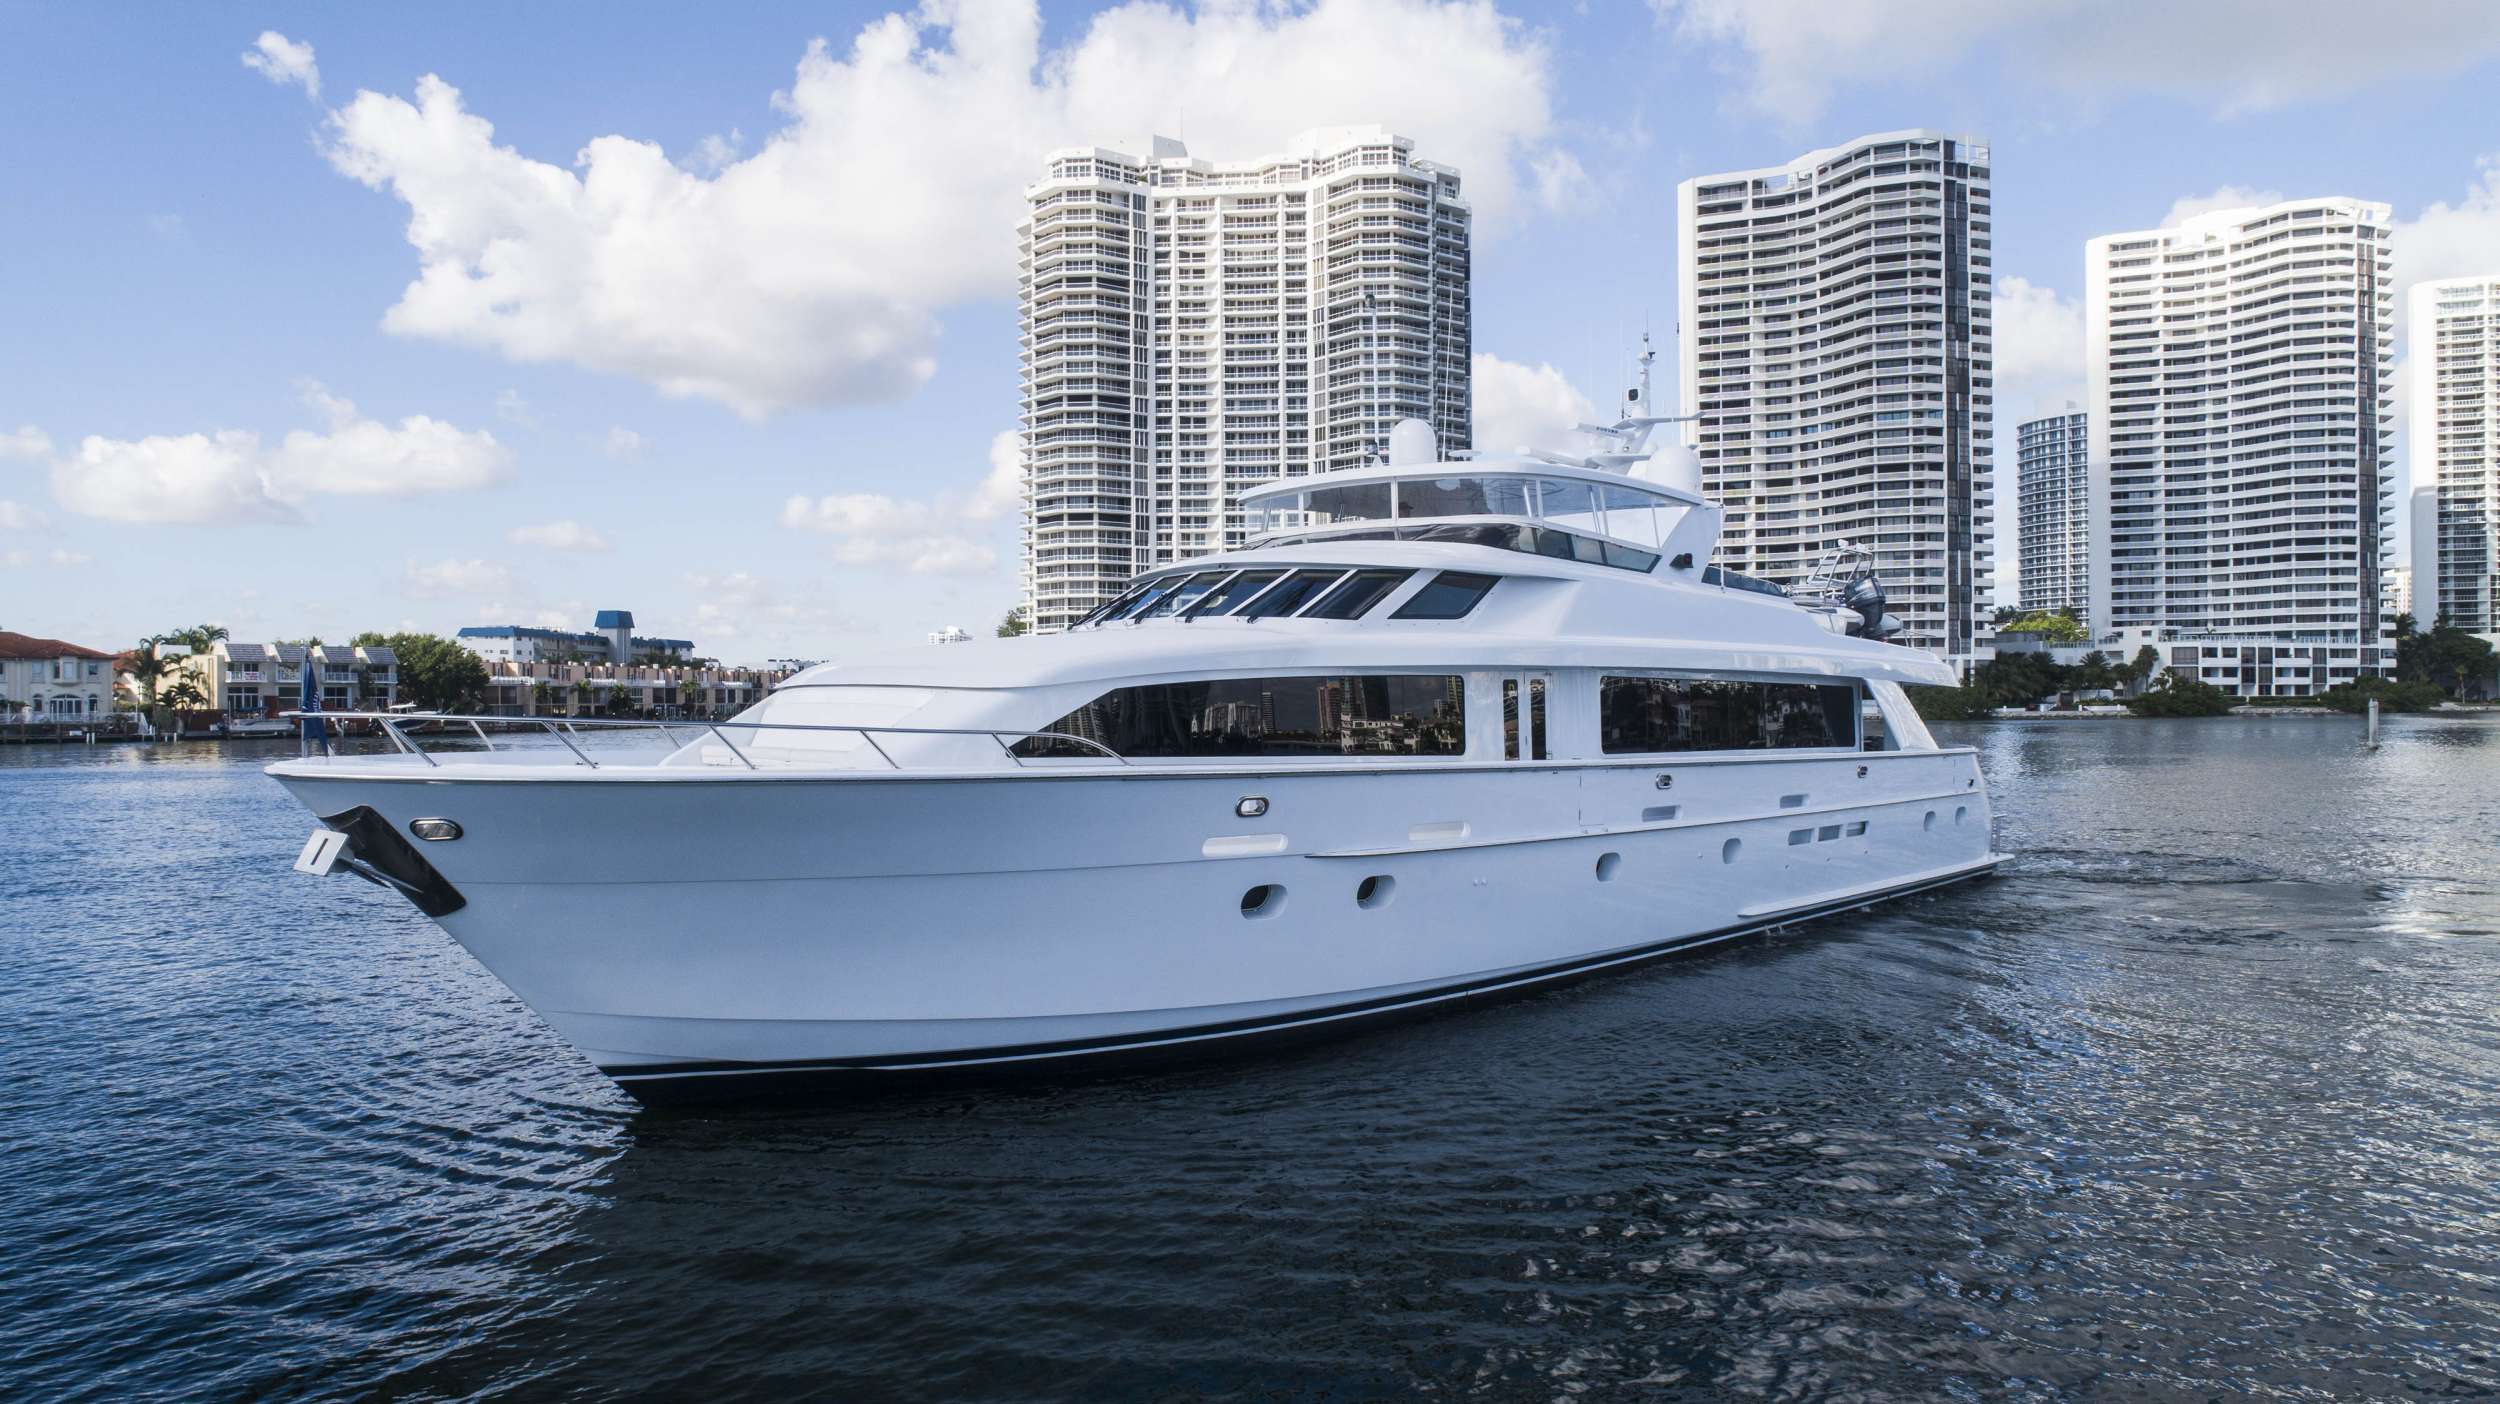 INEVITABLE - Yacht Charter Florida & Boat hire in US East Coast & Bahamas 1